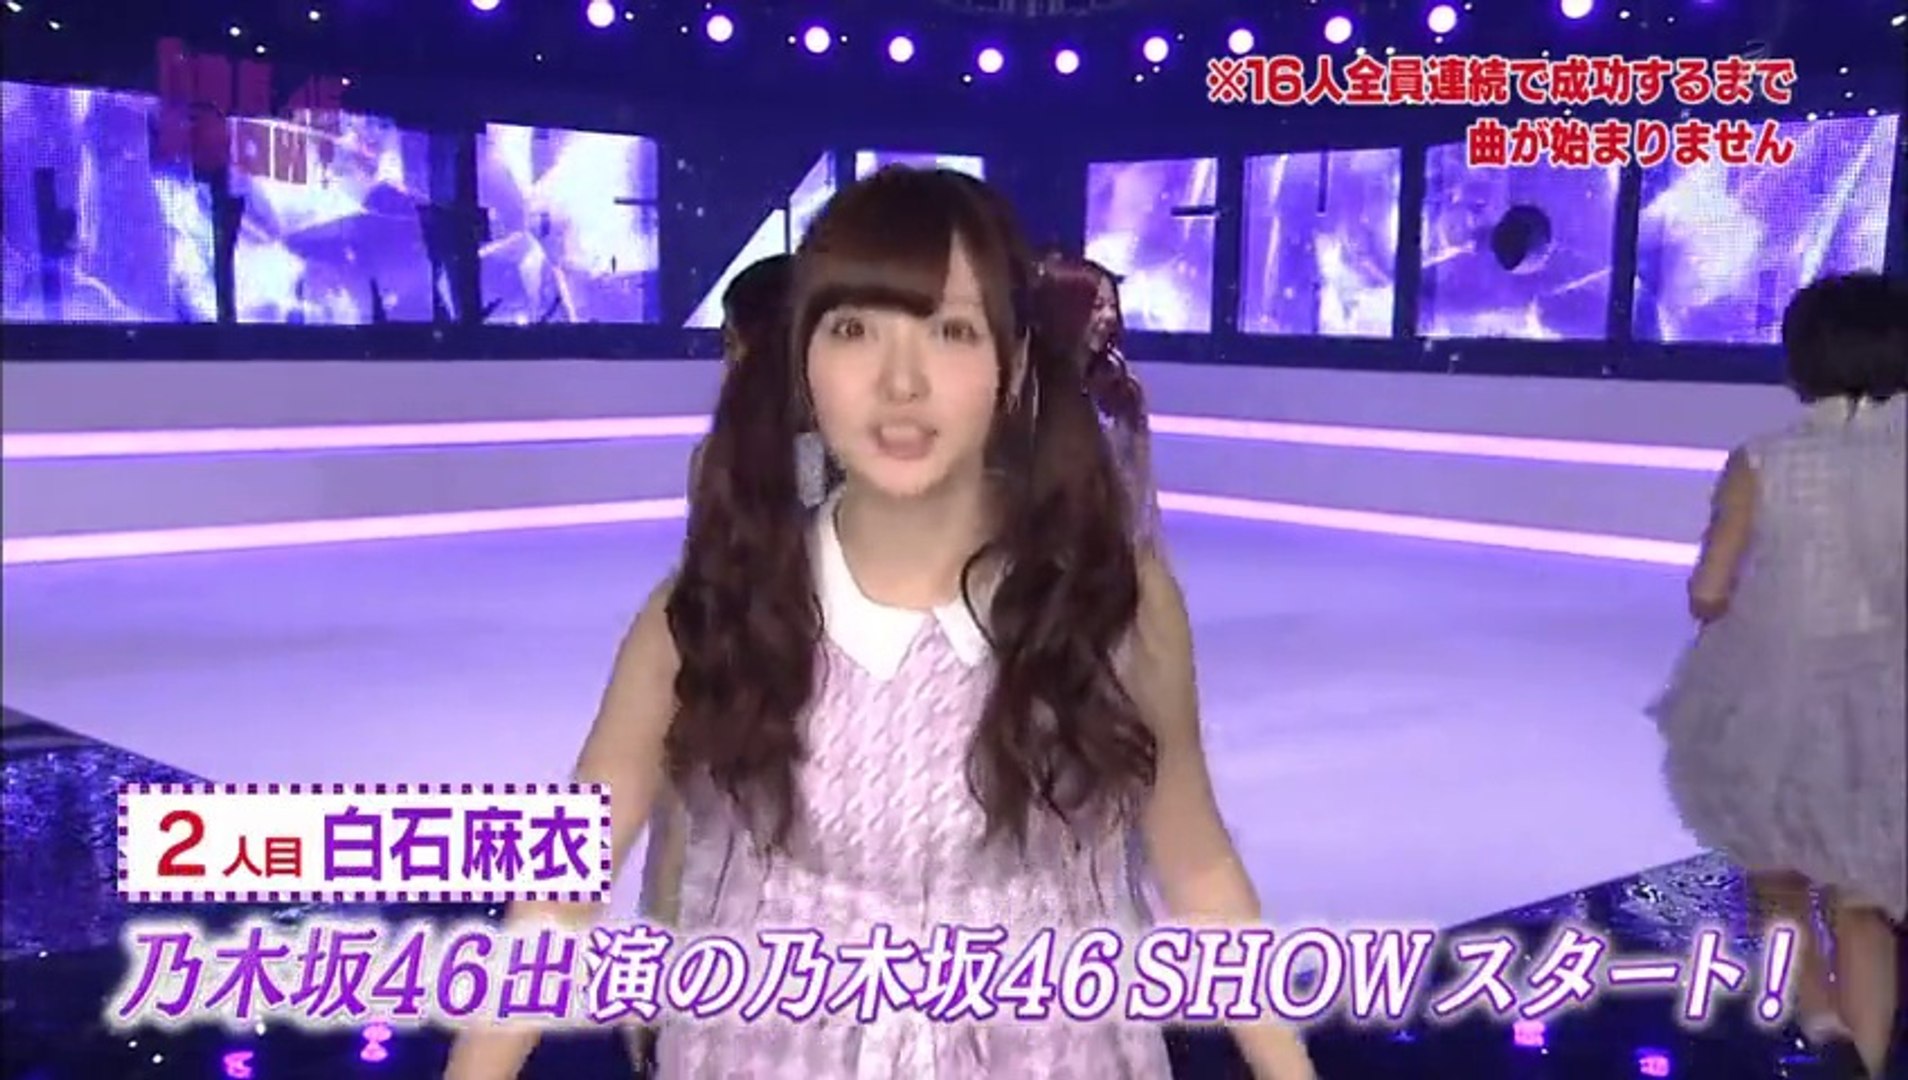 Nogizaka46 Show 2 動画 Dailymotion